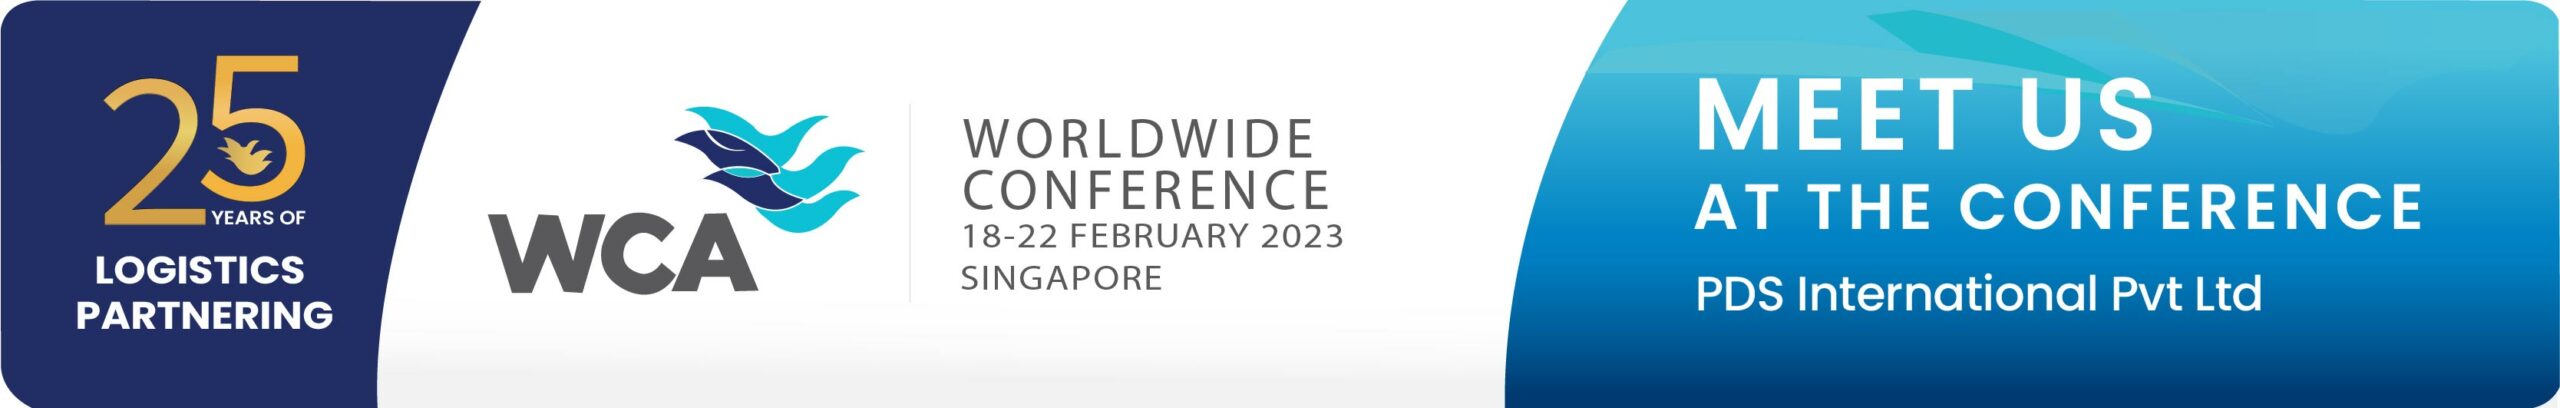 WCA Worldwide Conference 2023